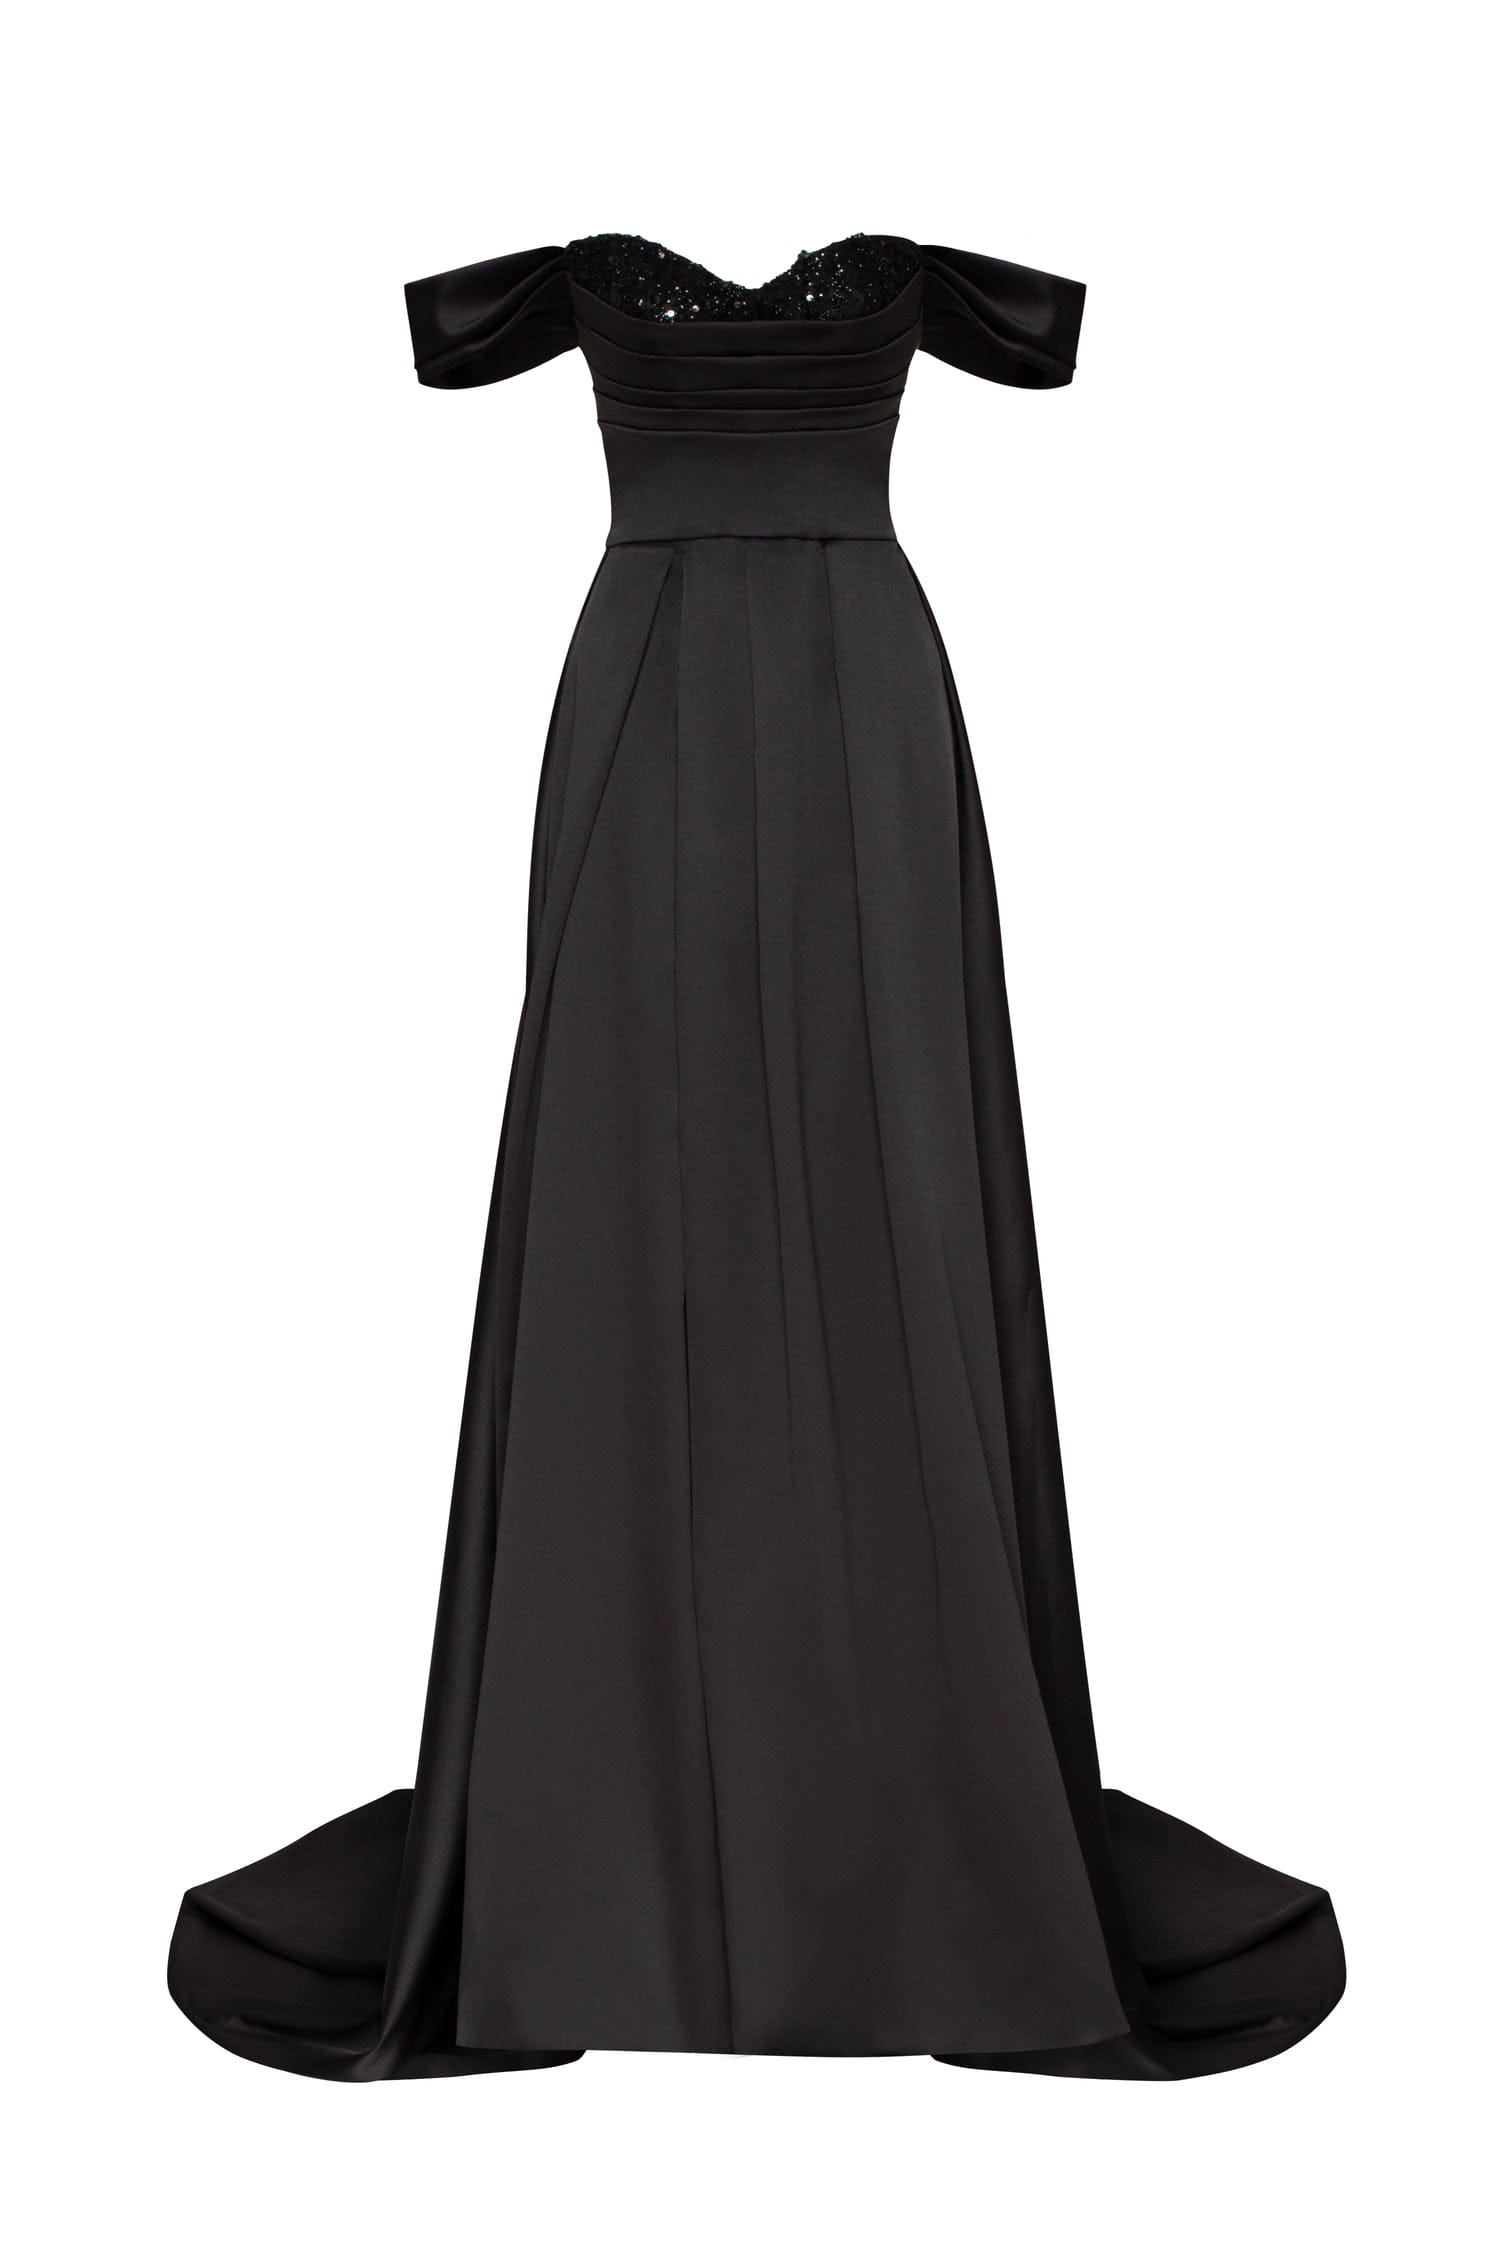 Black Gothic Wedding Dresses Ball Gown V Neck Wedding Dress – Bling Brides  Bouquet - Online Bridal Store